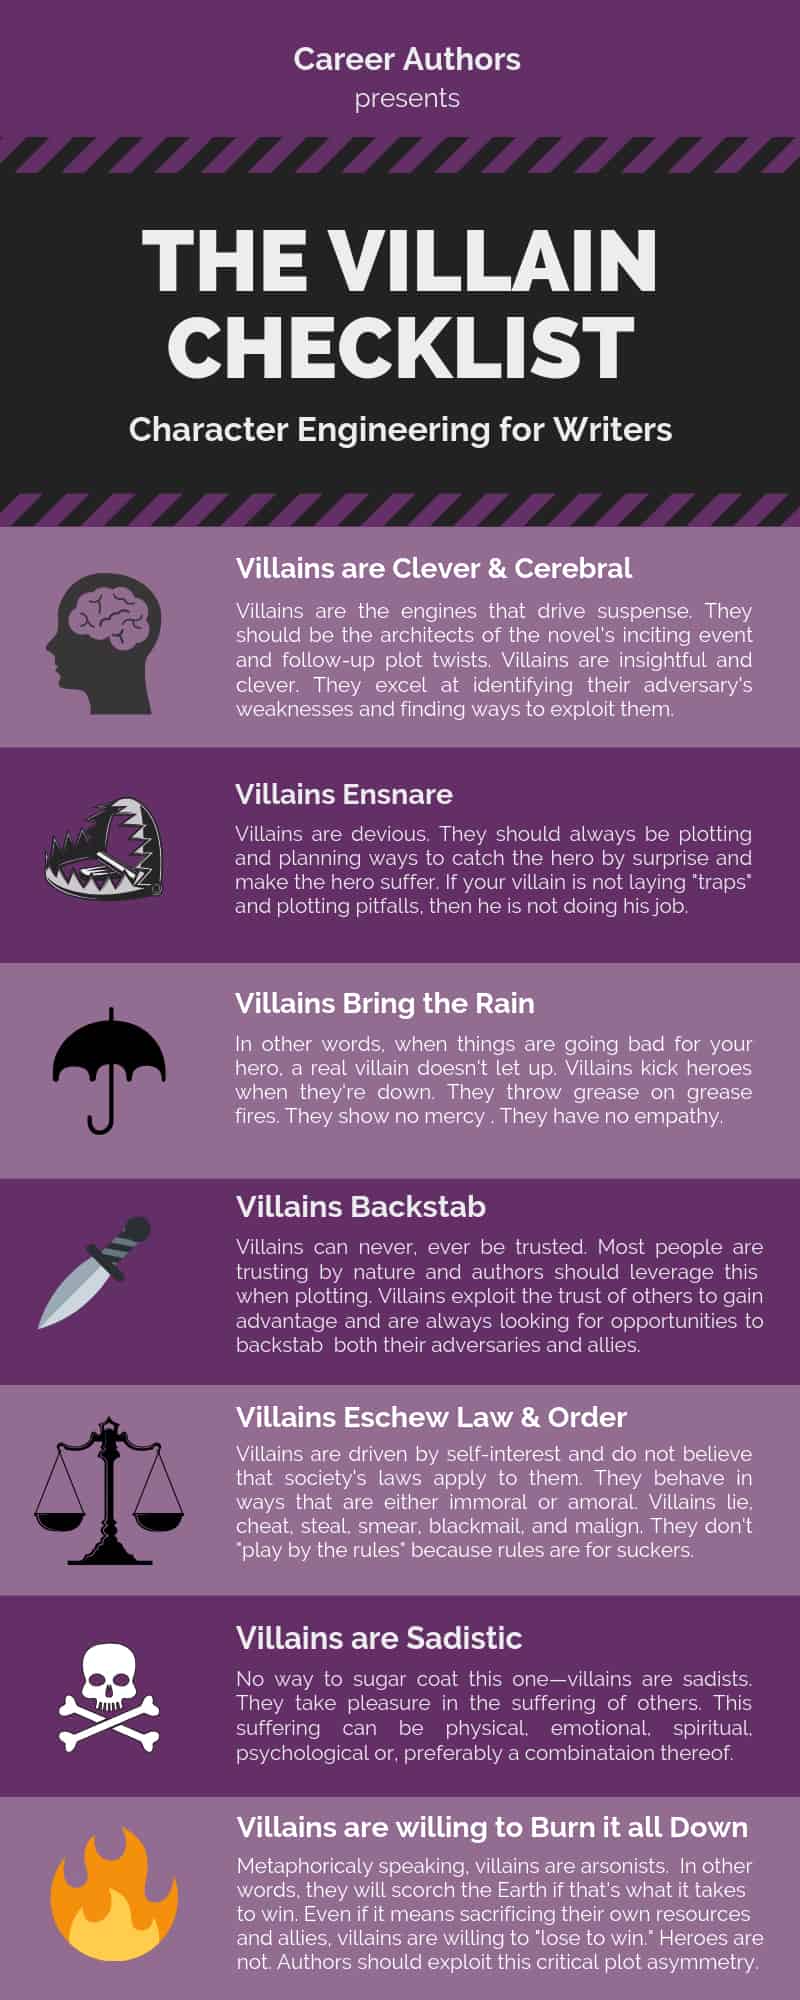 The Villain Checklist - How to Create a "Great & Terrible" Villain